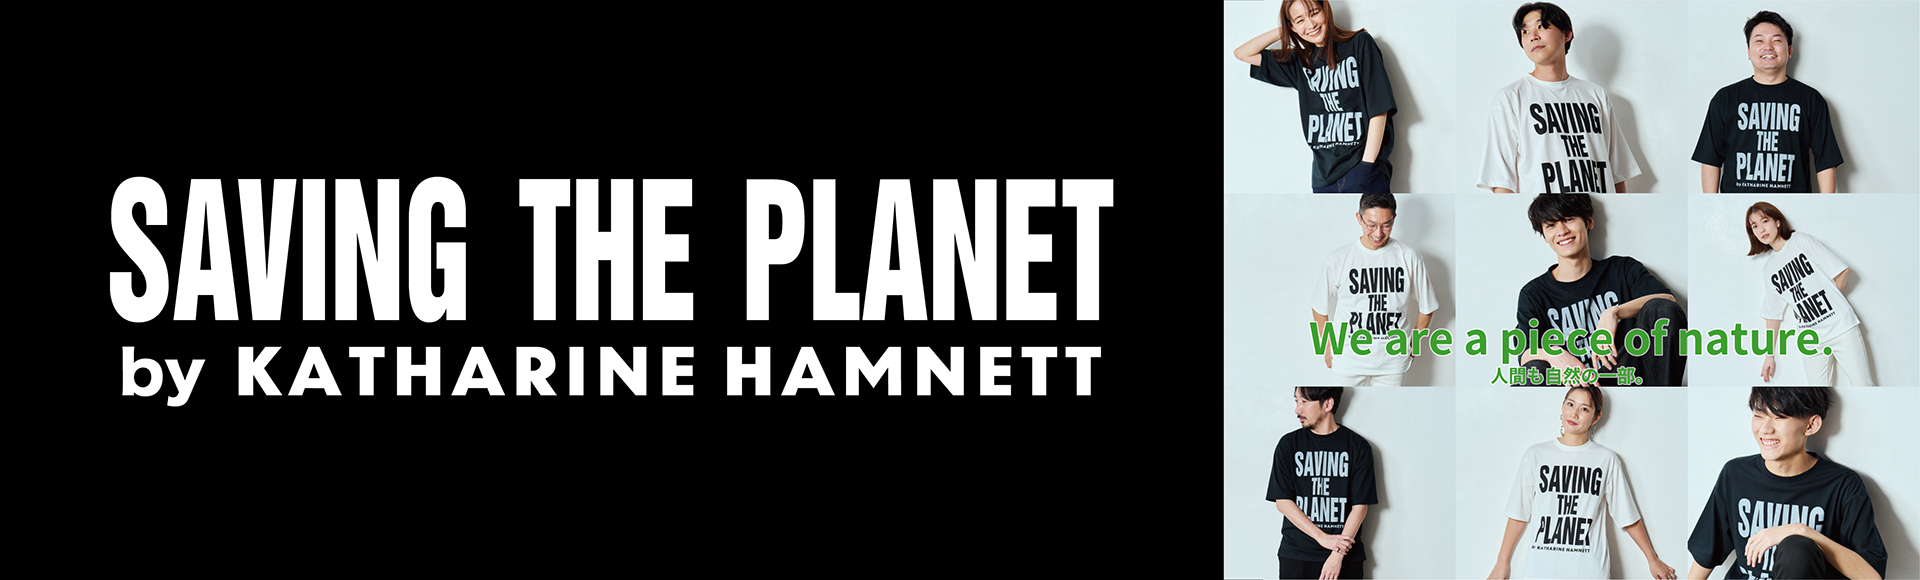 SAVING THE PLANET by KATHARINE HAMNETT